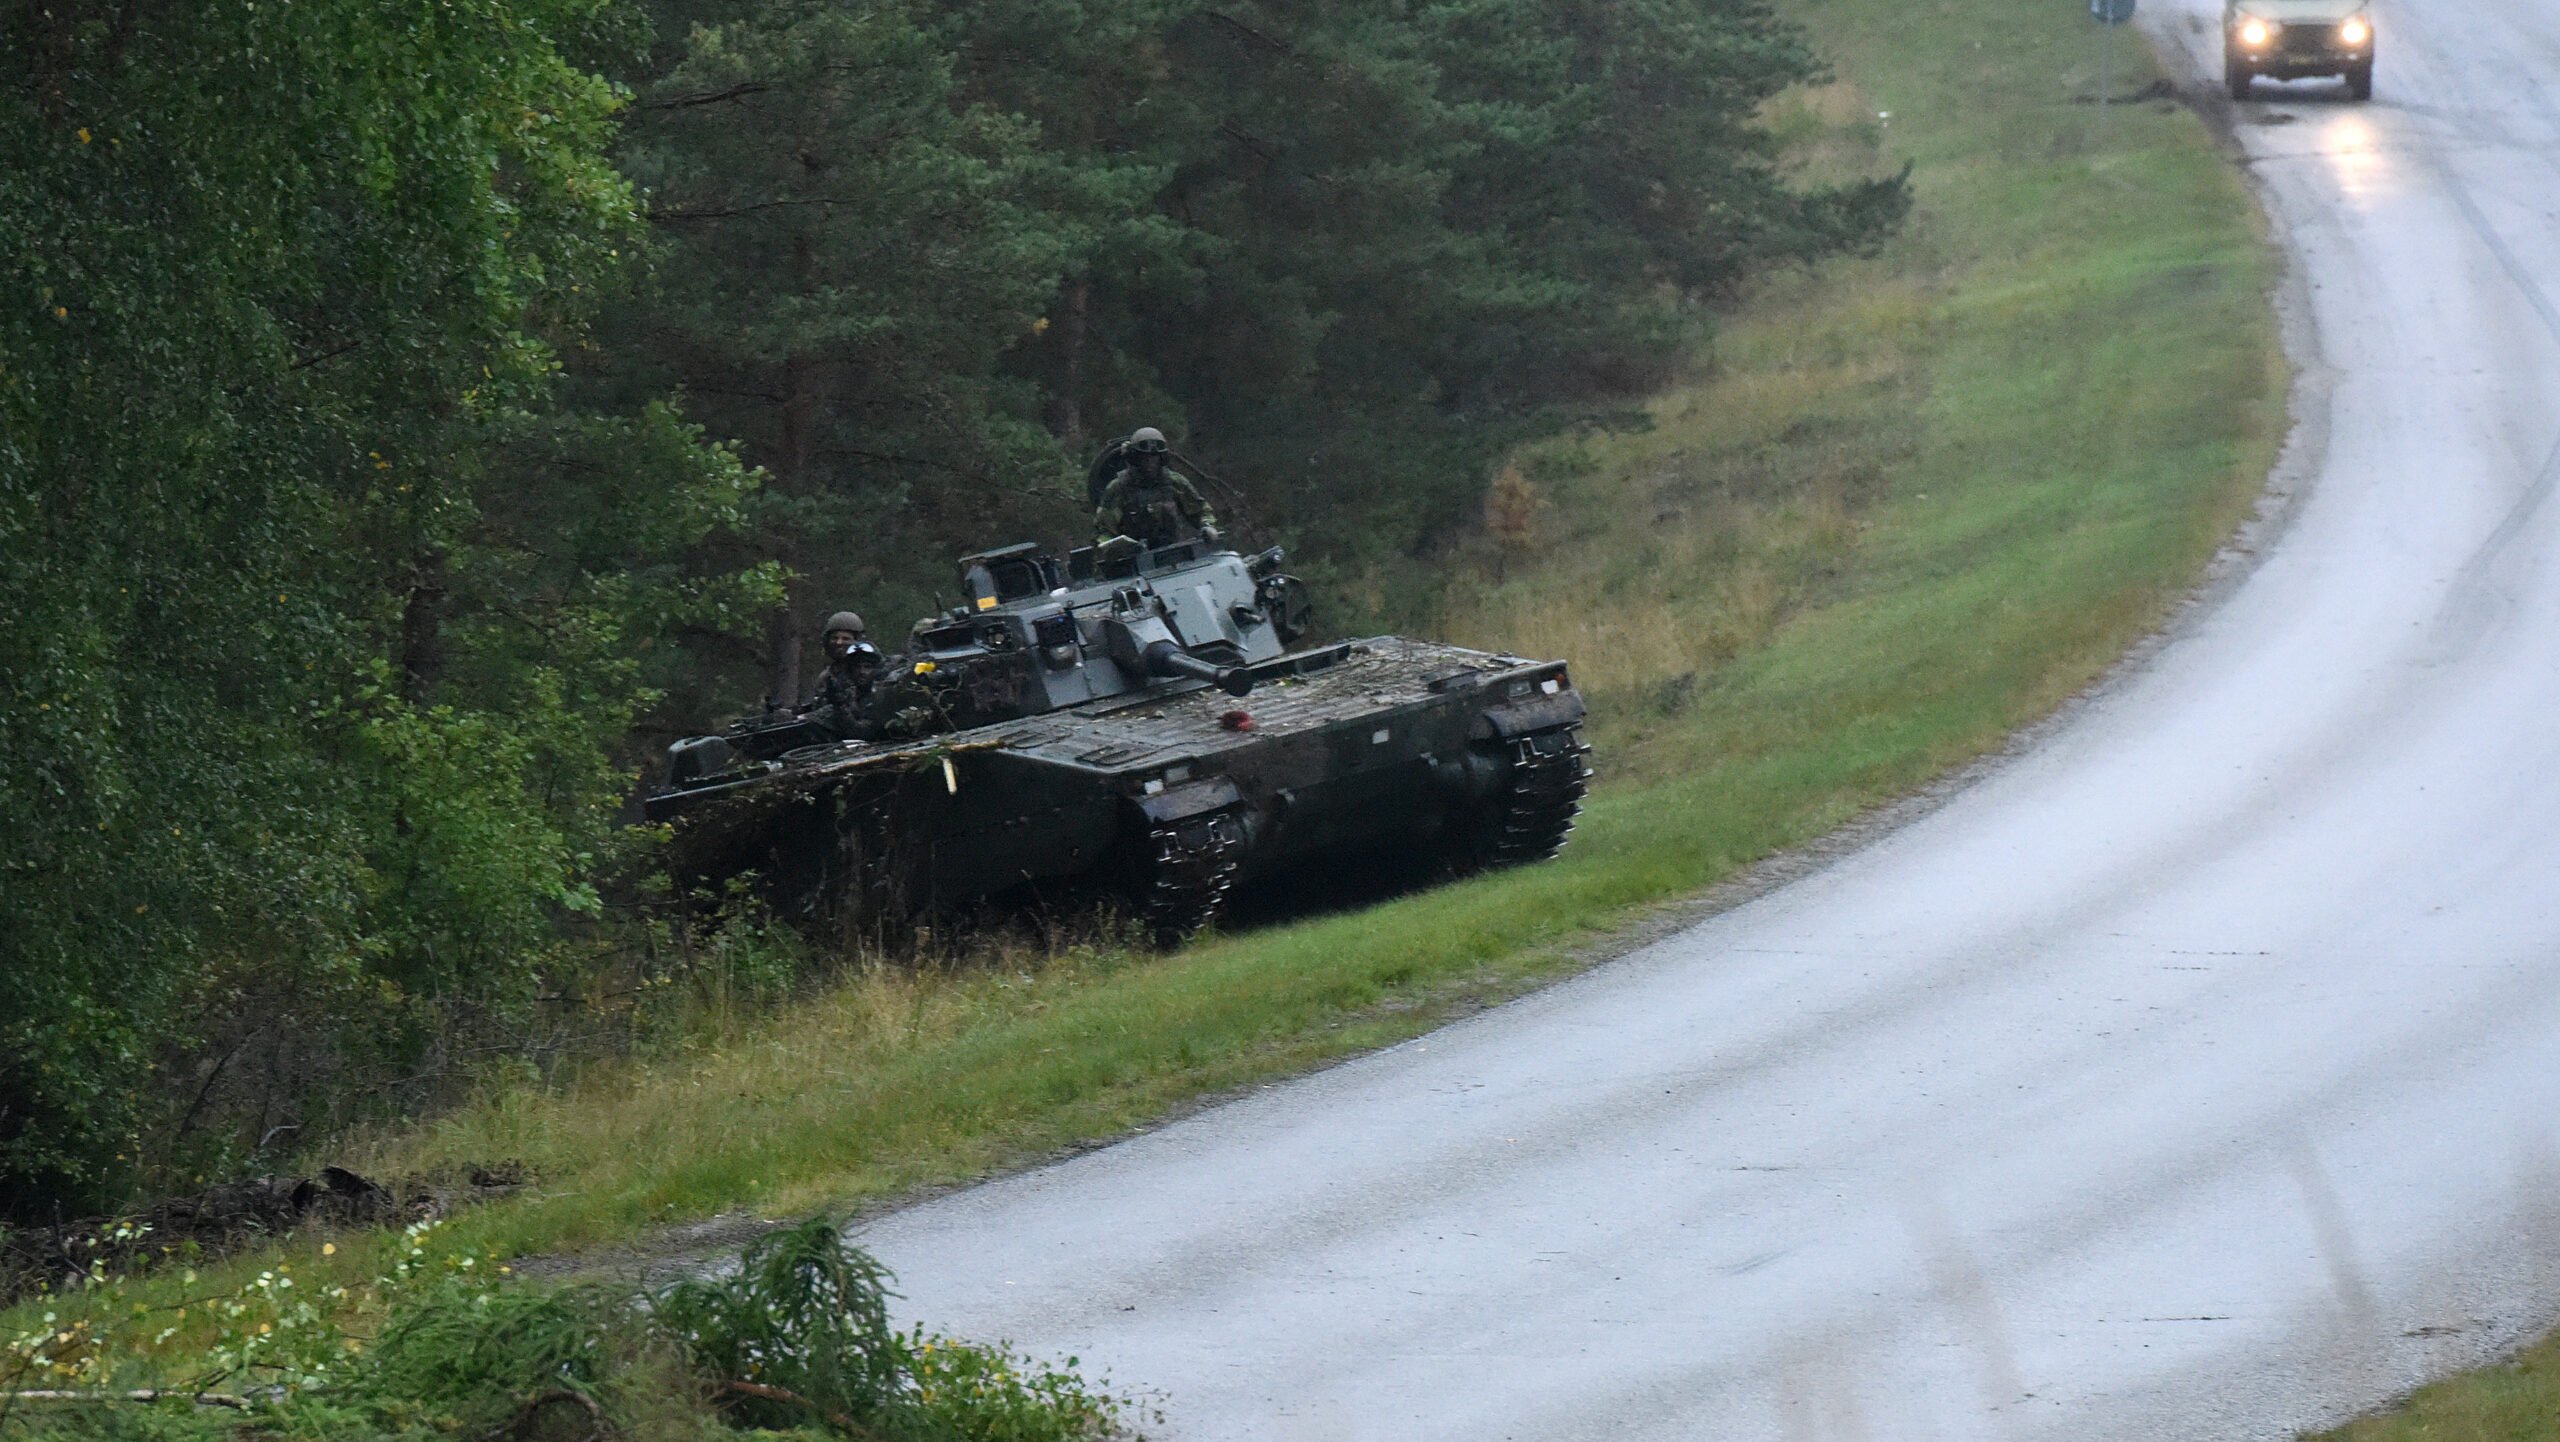 Sweden signs BAE contract to replenish combat vehicles donated to Ukraine - Breaking Defense